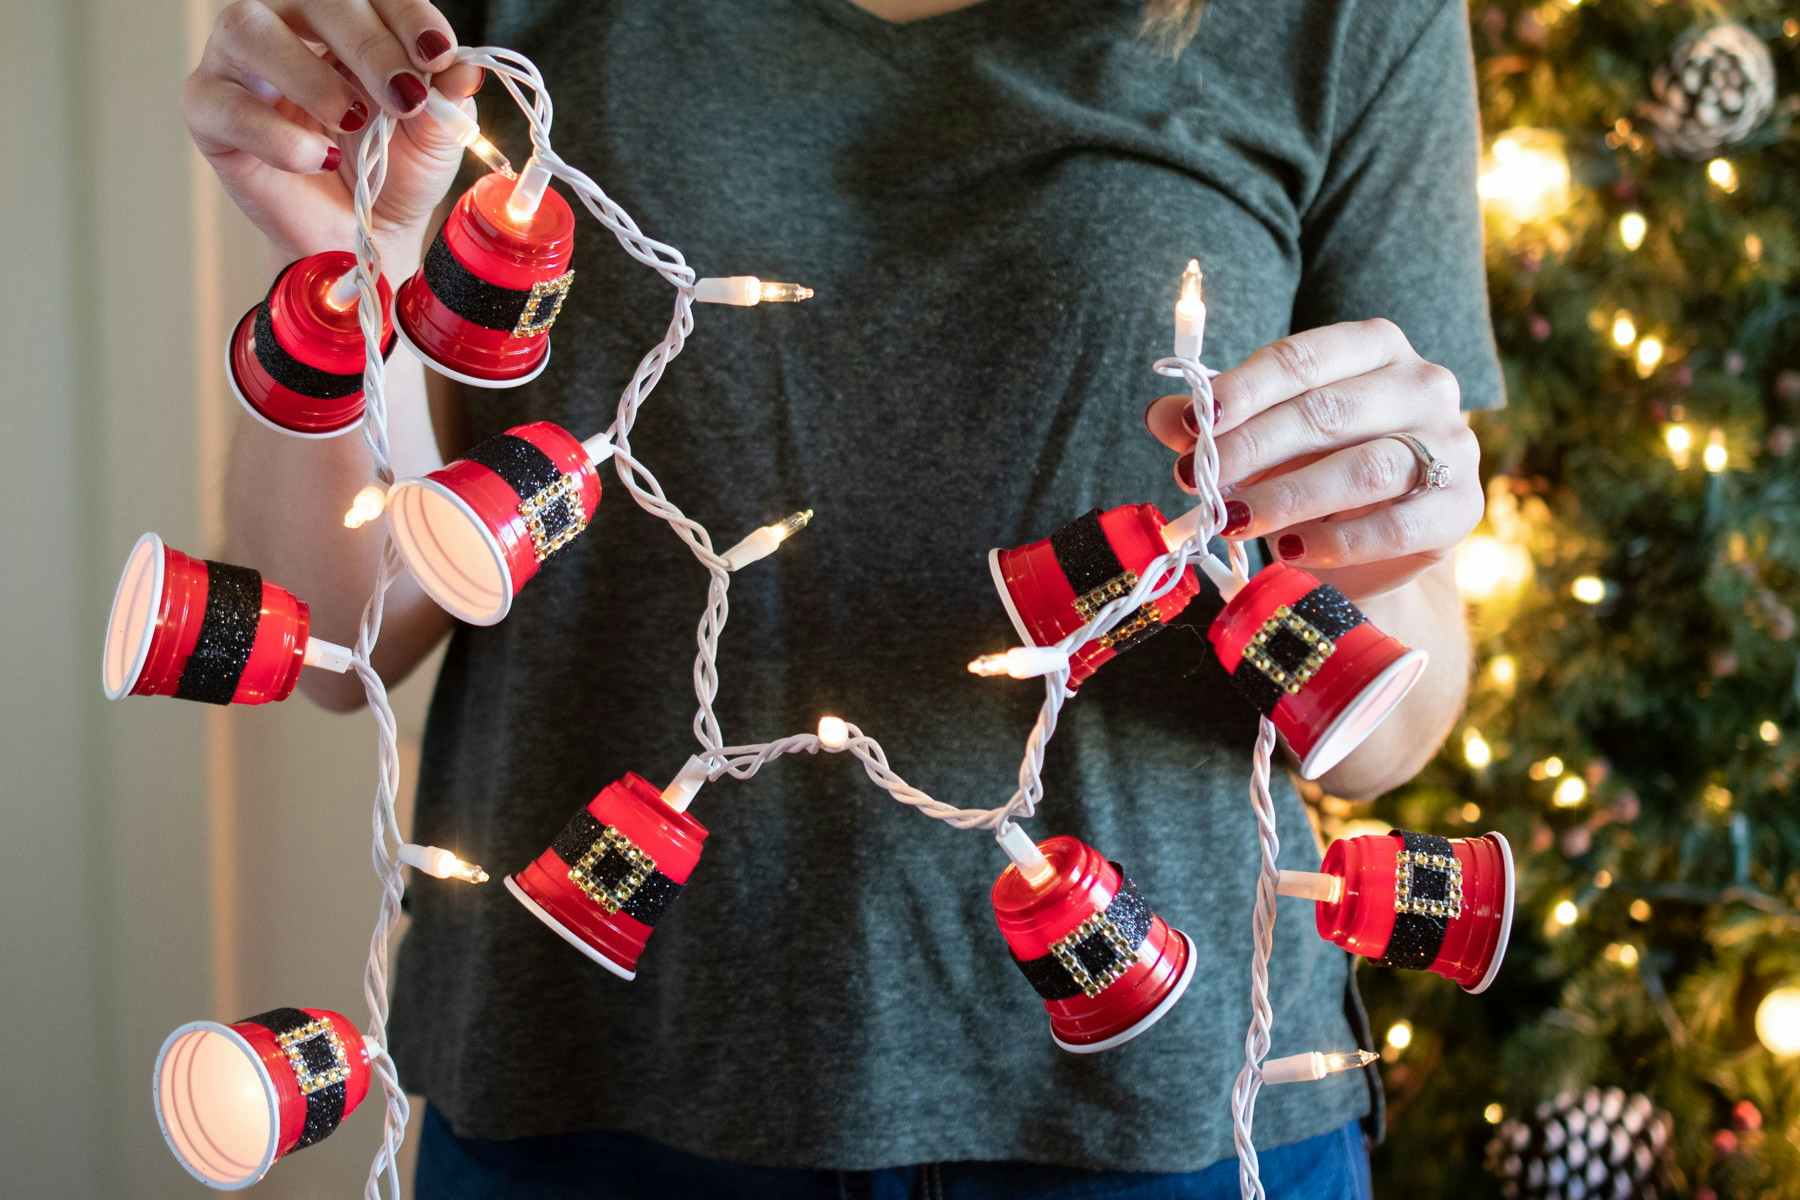 Turn CHEAP plastic hangers into LARGE Christmas Decor! $1 Dollar